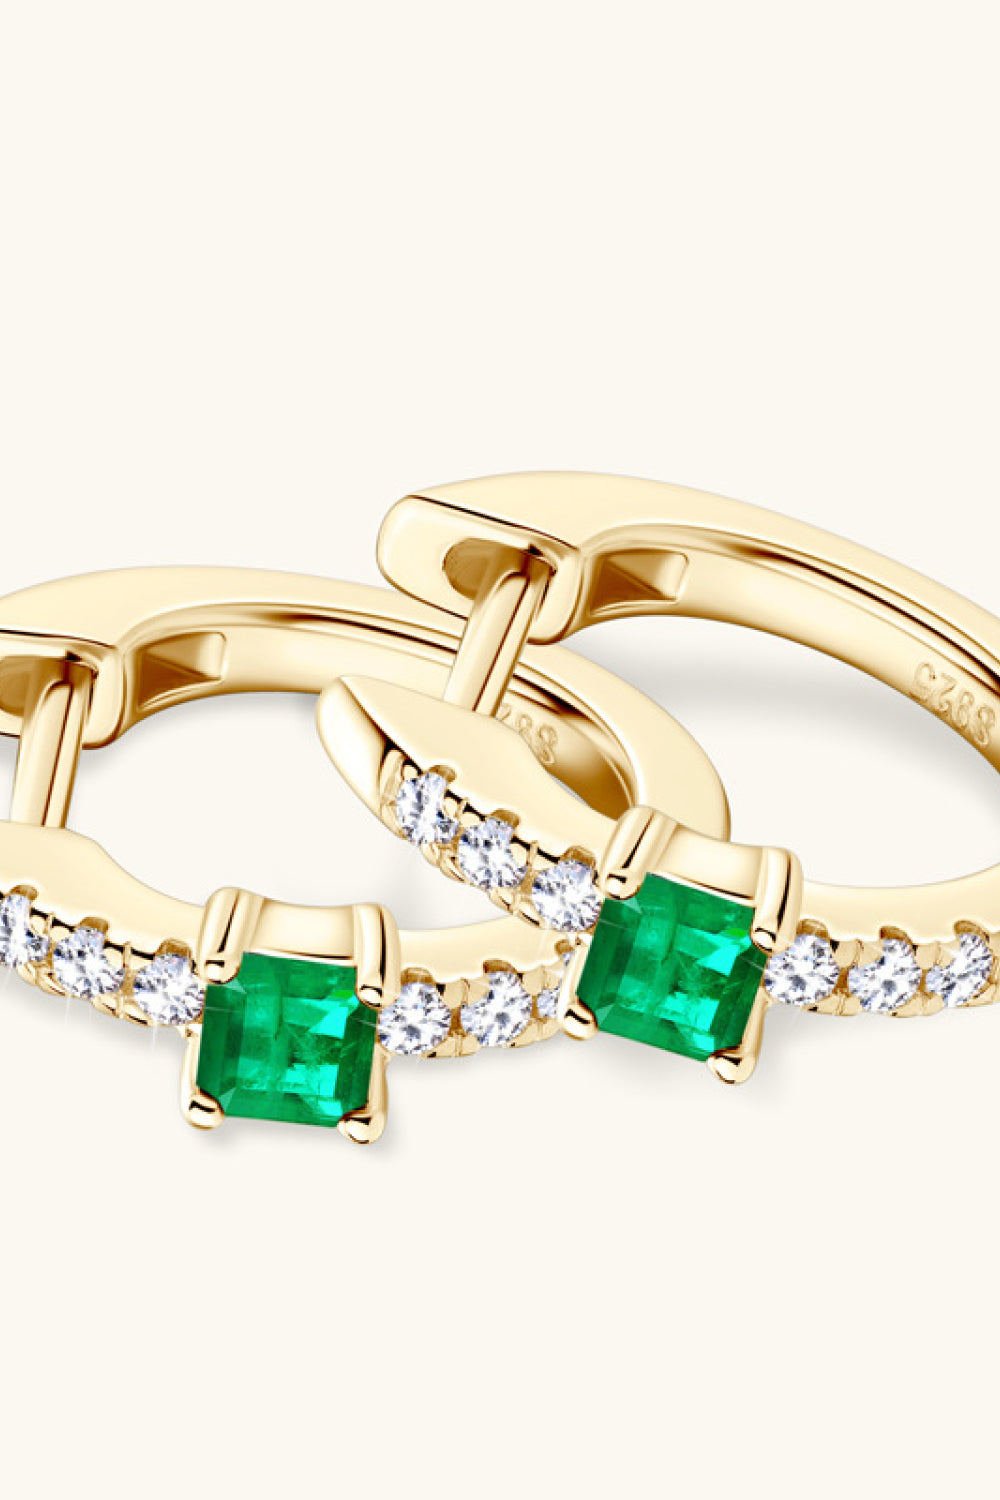 Ethereal Emeralds Earrings